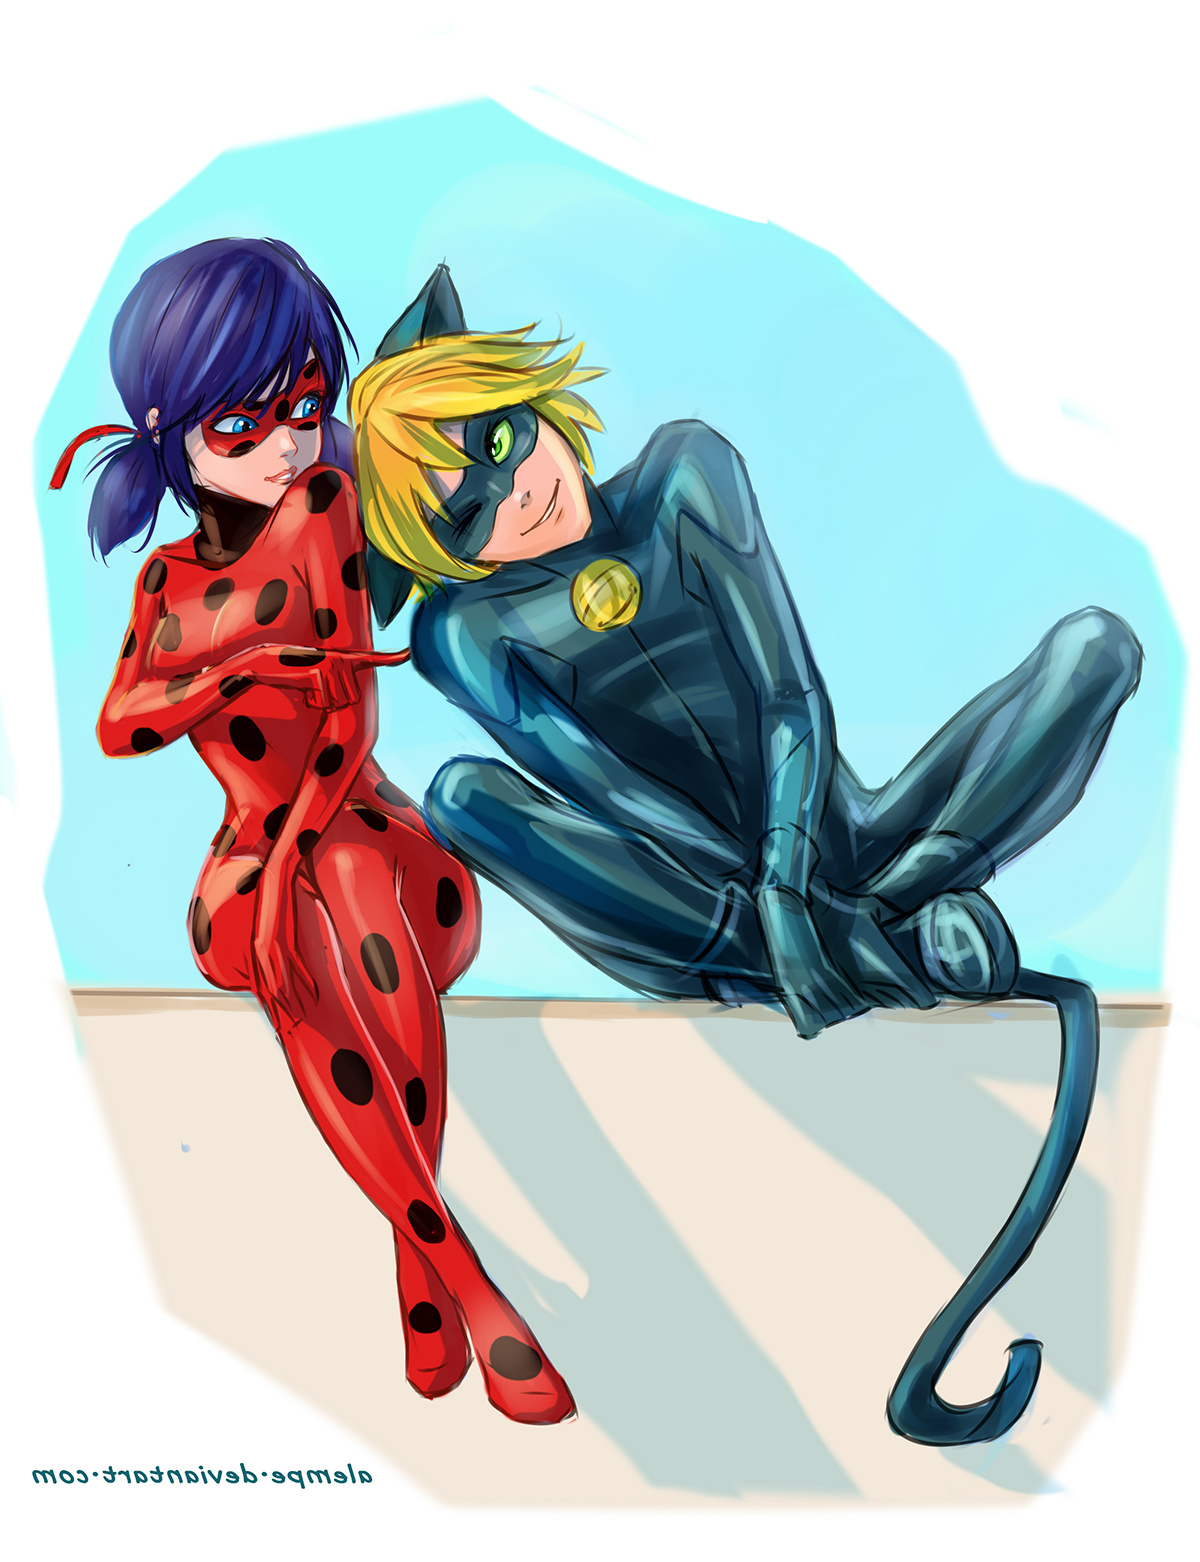 Chat Noir (Ladybug)